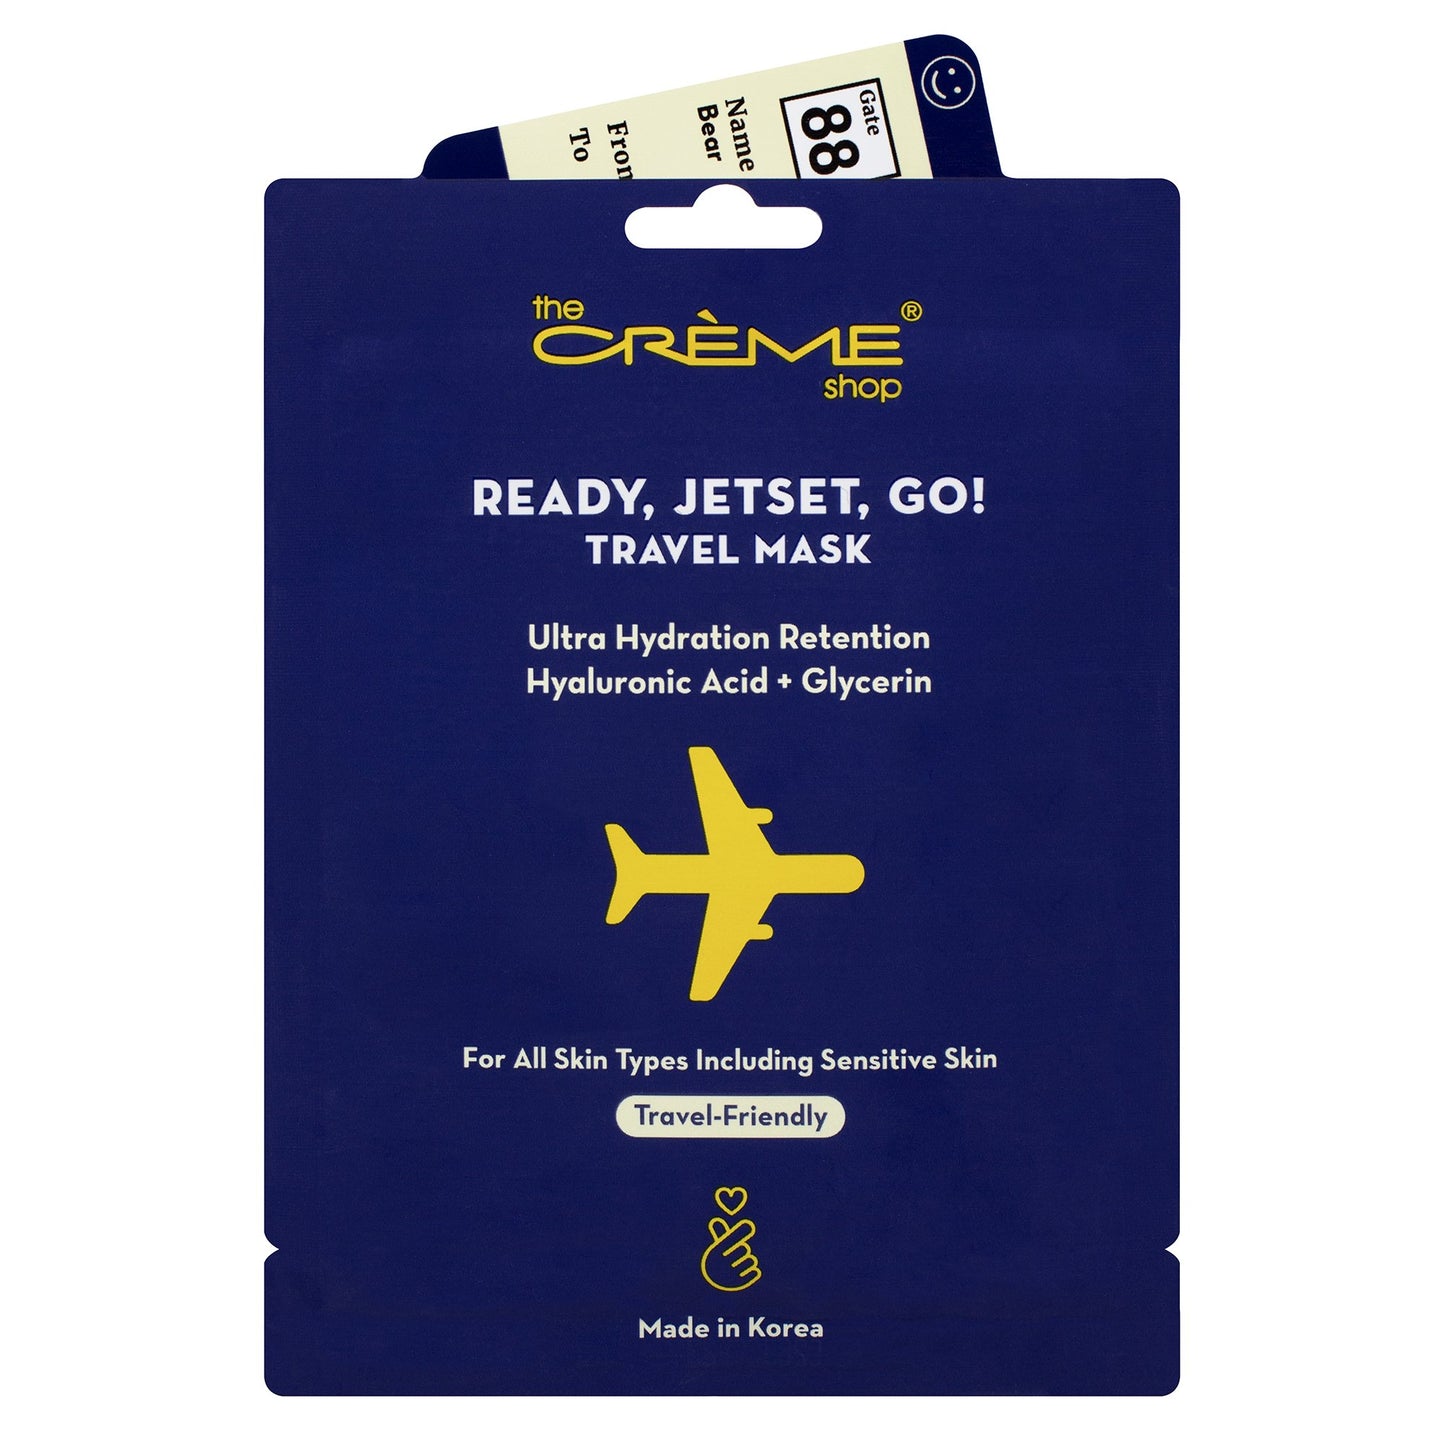 Ready, Jetset, Go! Travel Mask - The Crème Shop